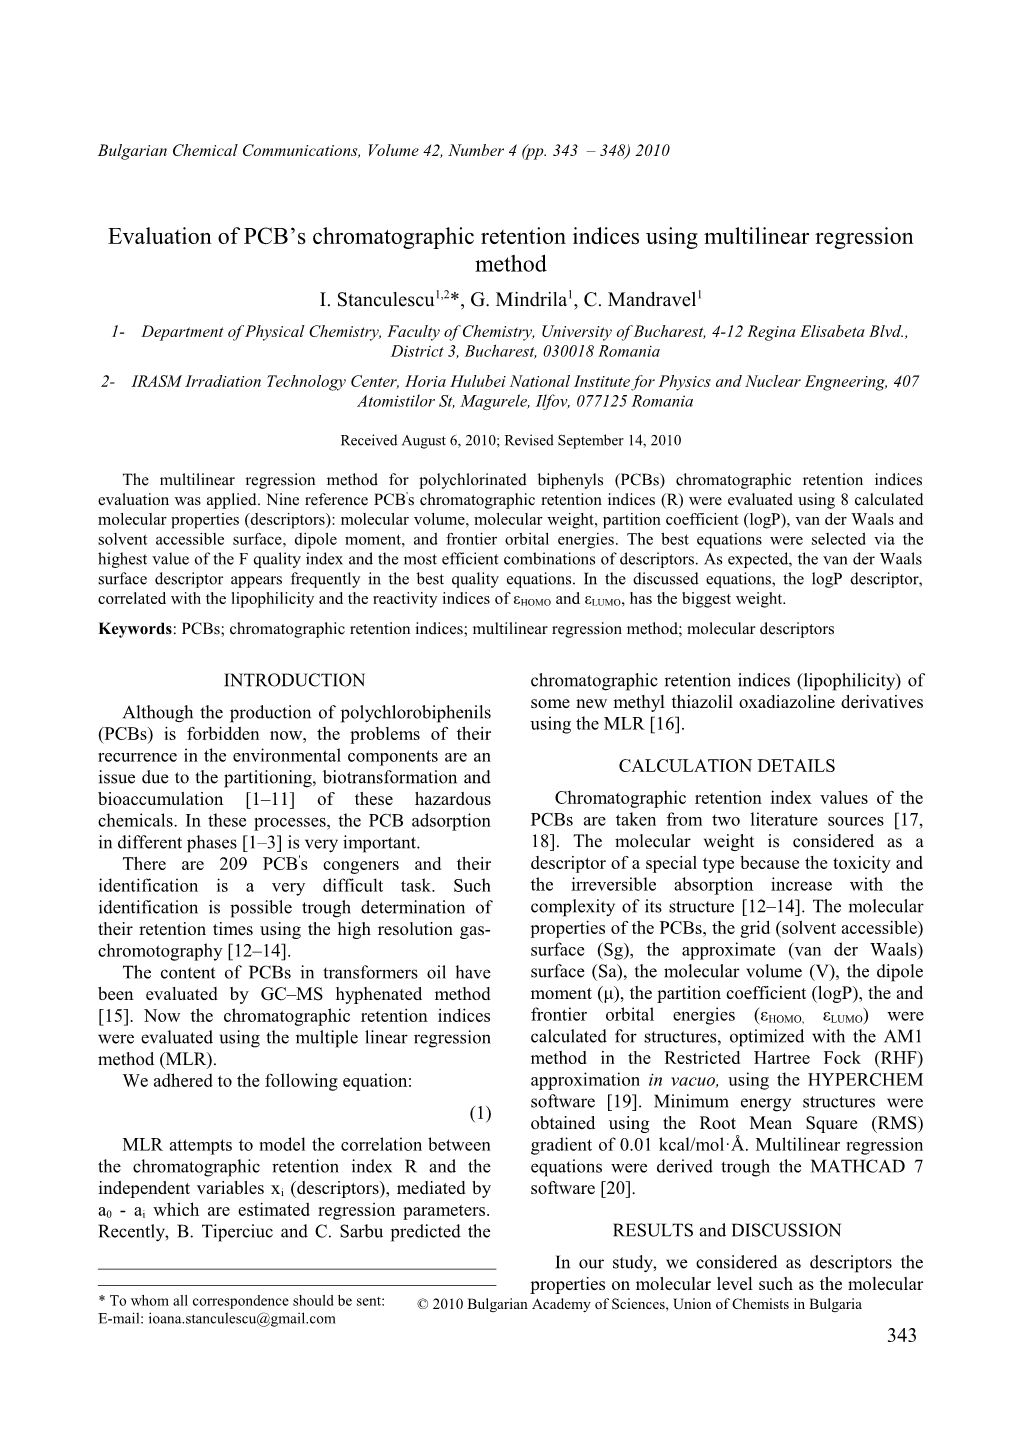 I. Stanculescu Et Al.: Evaluation of PCB Chromatographic Retention Indices Using Multilinear